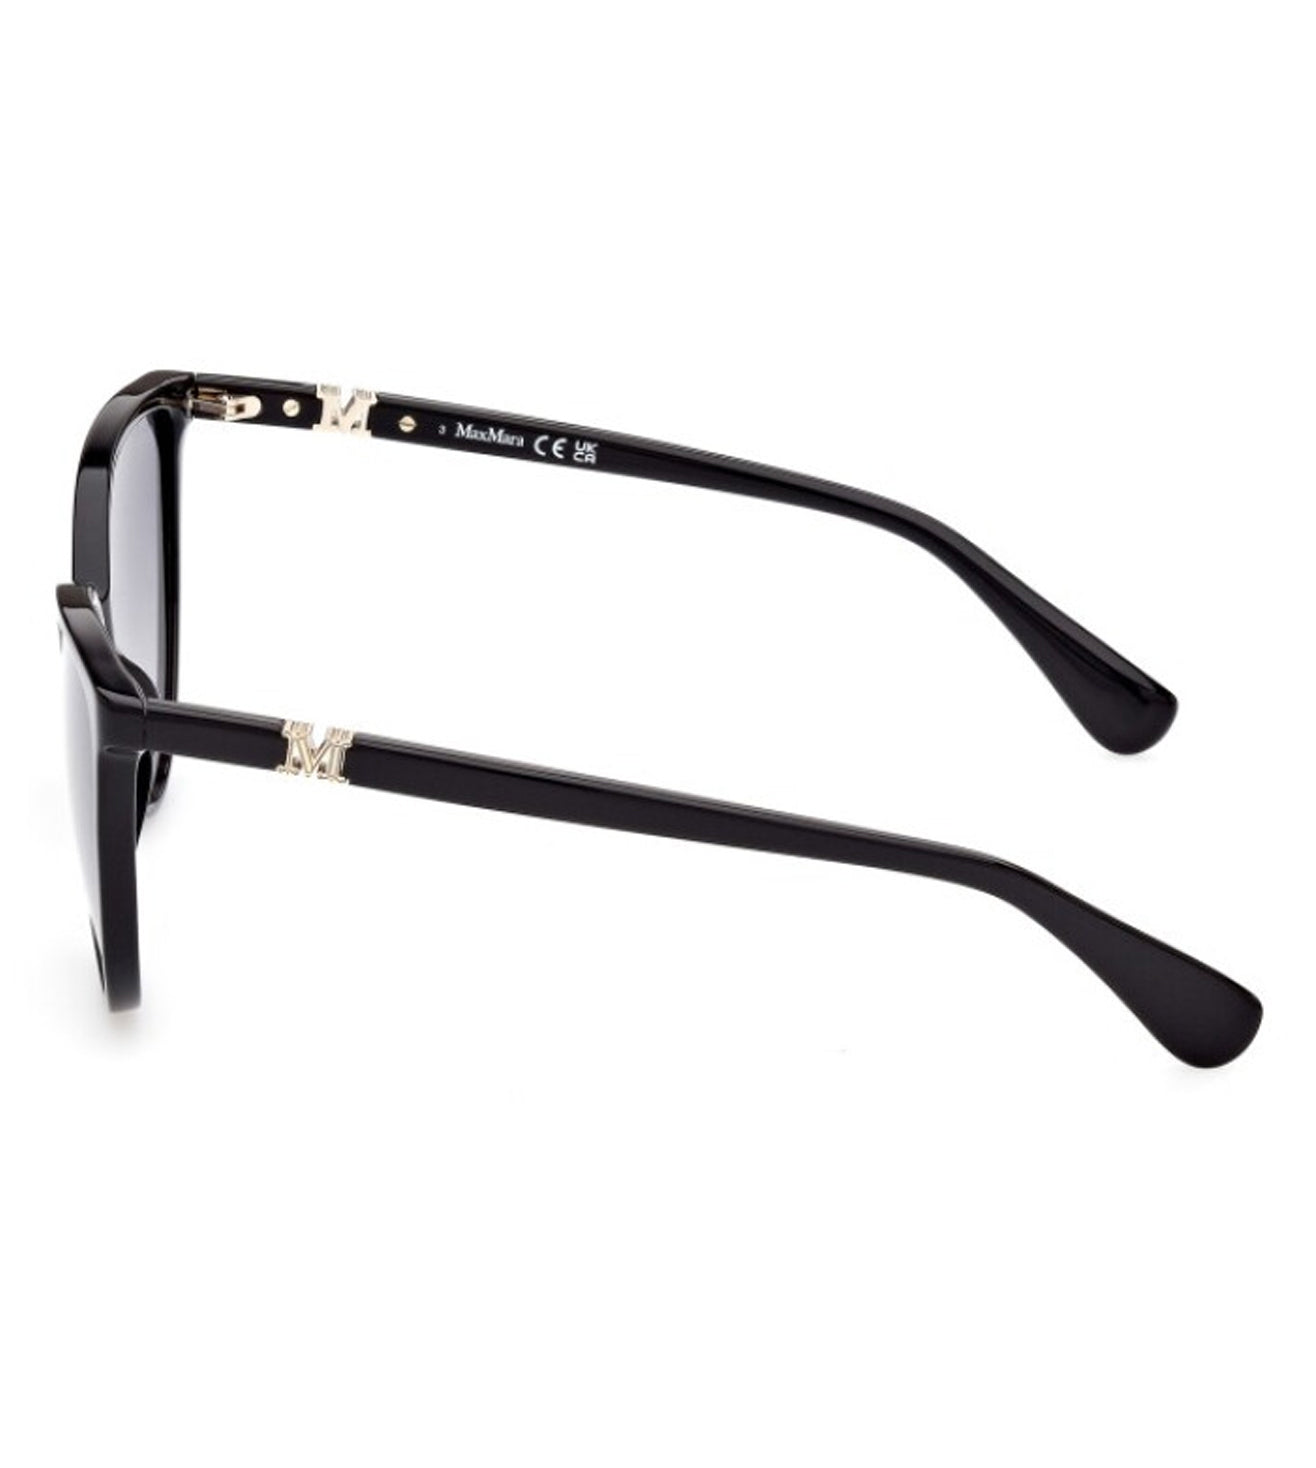 Max Mara Women's Gradient Grey Cat-eye Sunglasses